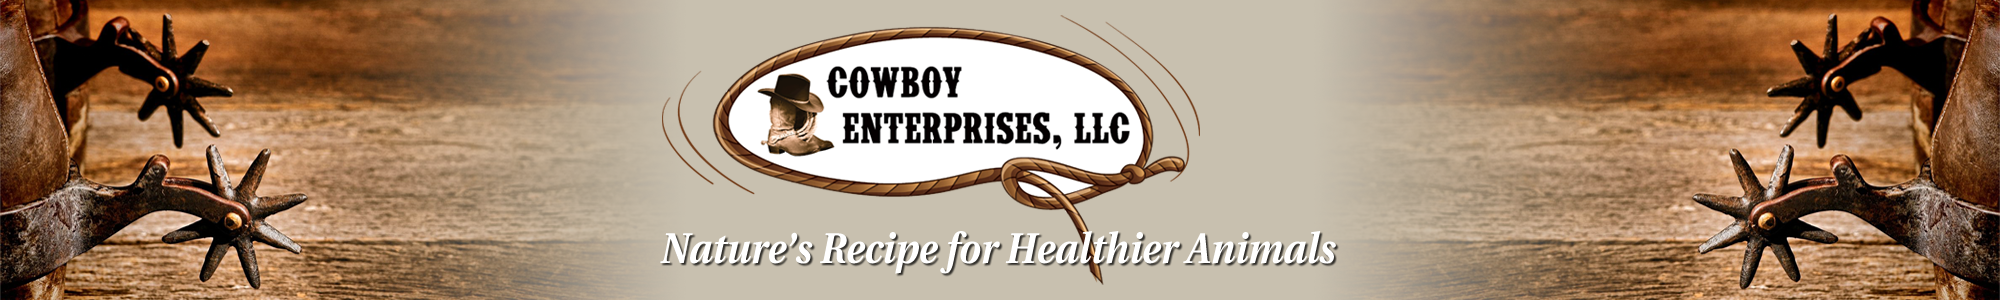 Cowboy Enterprises, LLC